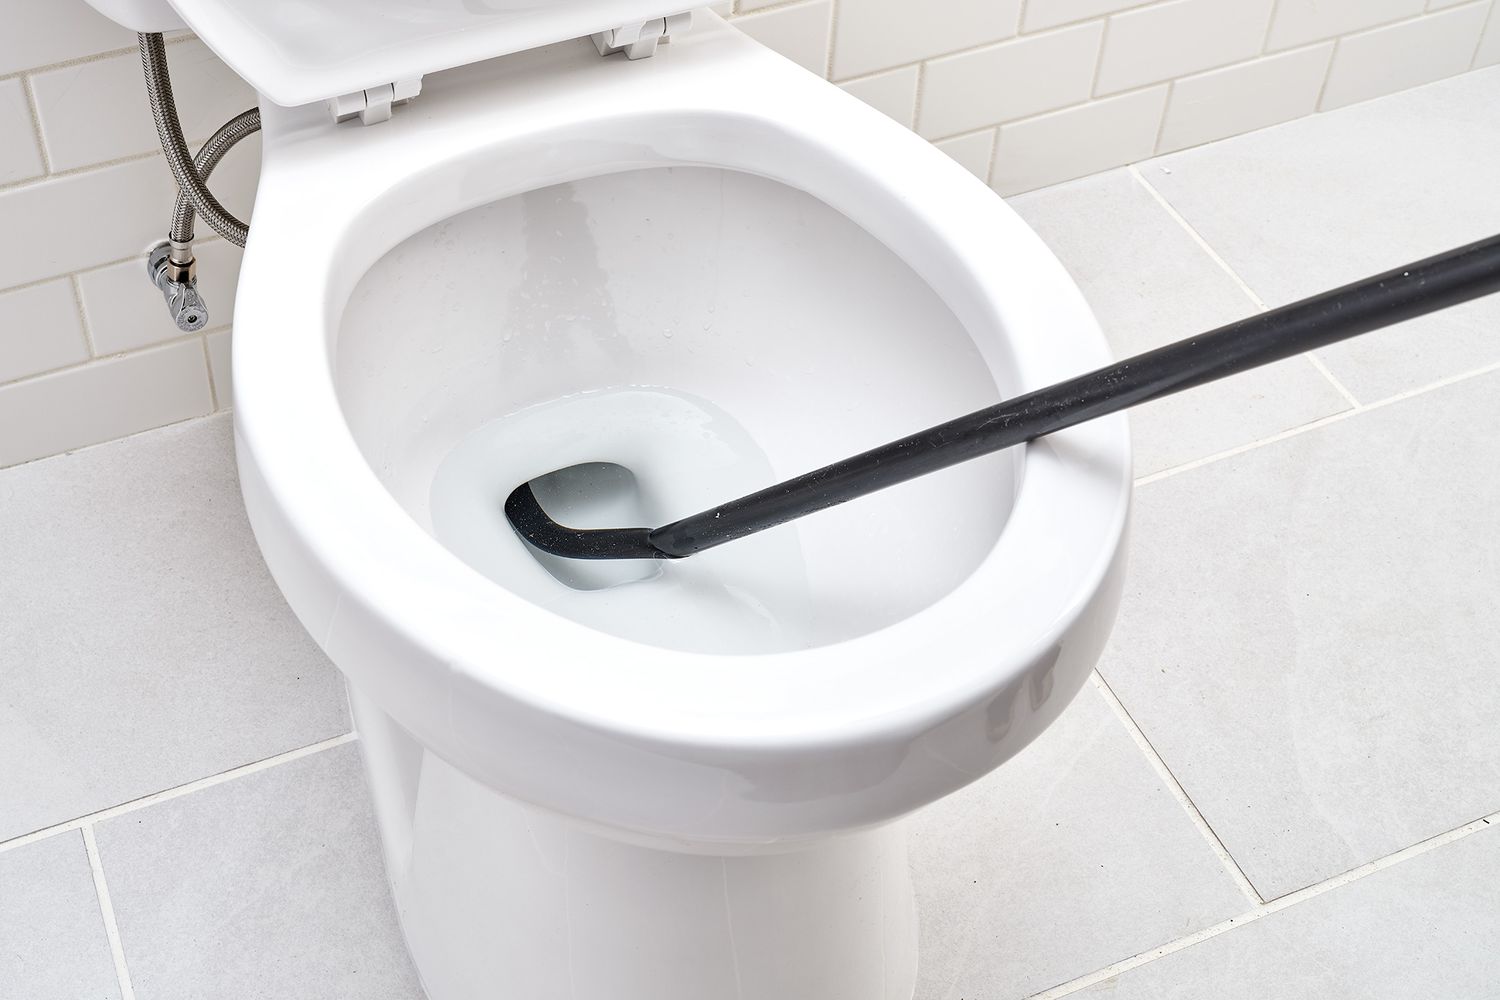 Black toilet auger inserted inside hole of toilet bowl